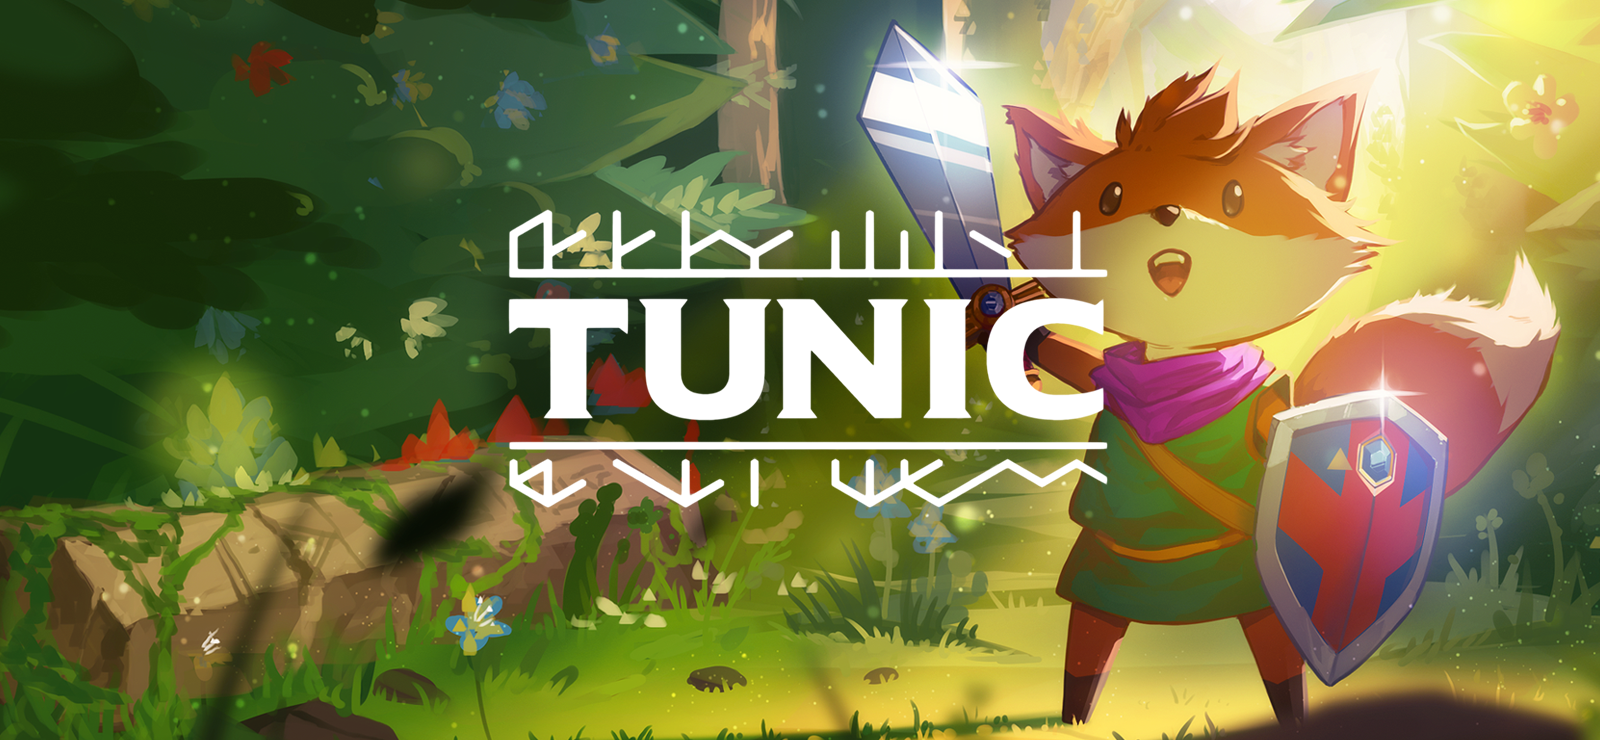 TUNIC + TUNIC (Original Game Soundtrack)